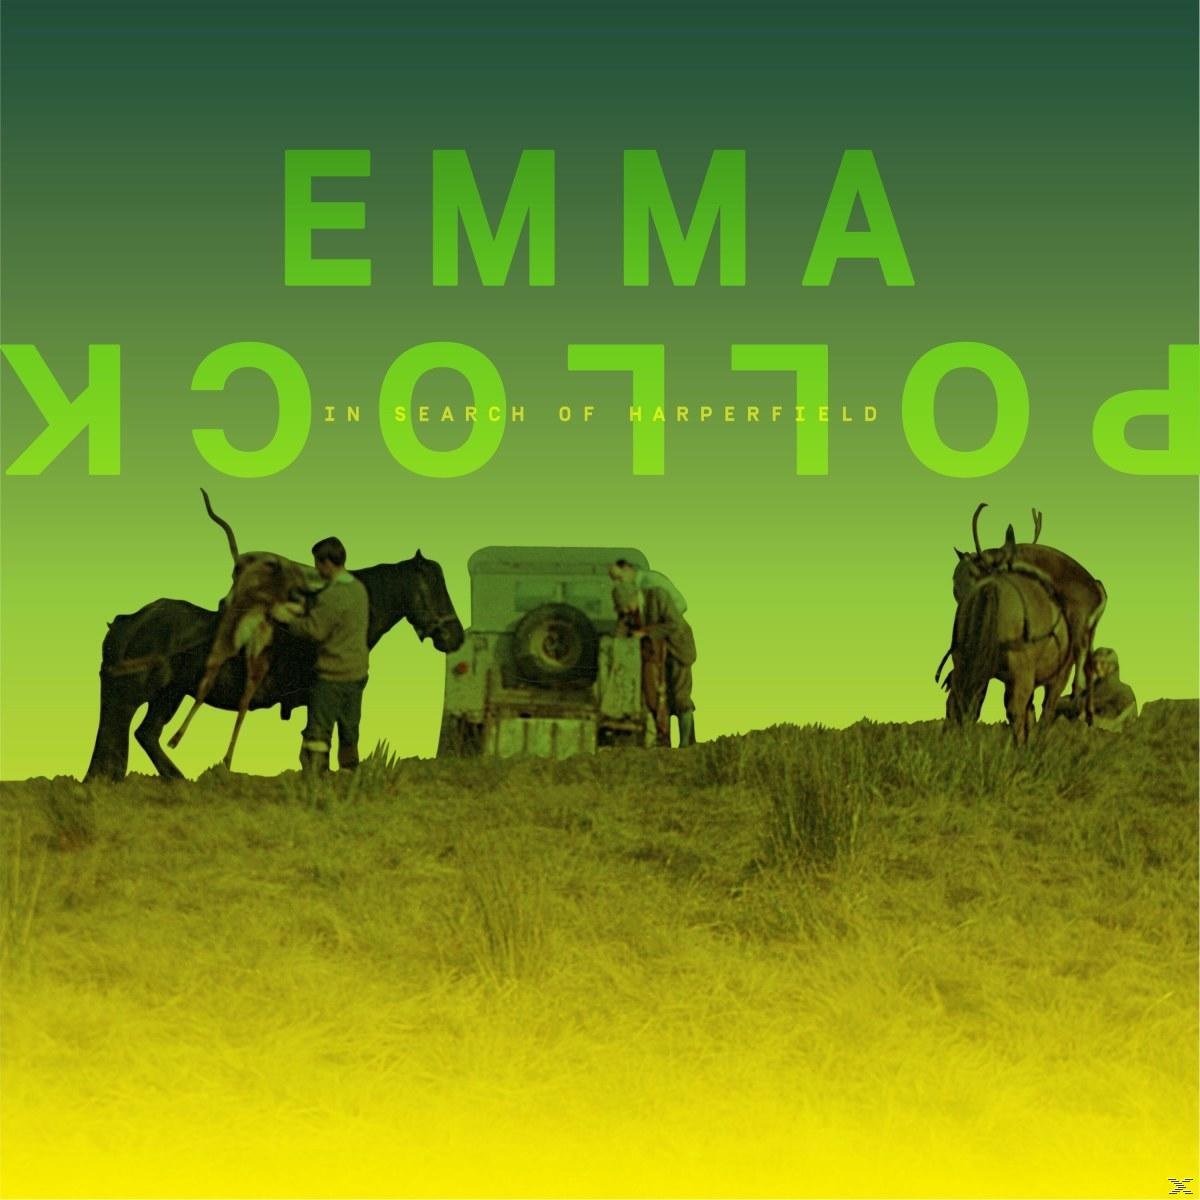 (CD) In Pollock Harperfield - Search Of Emma -